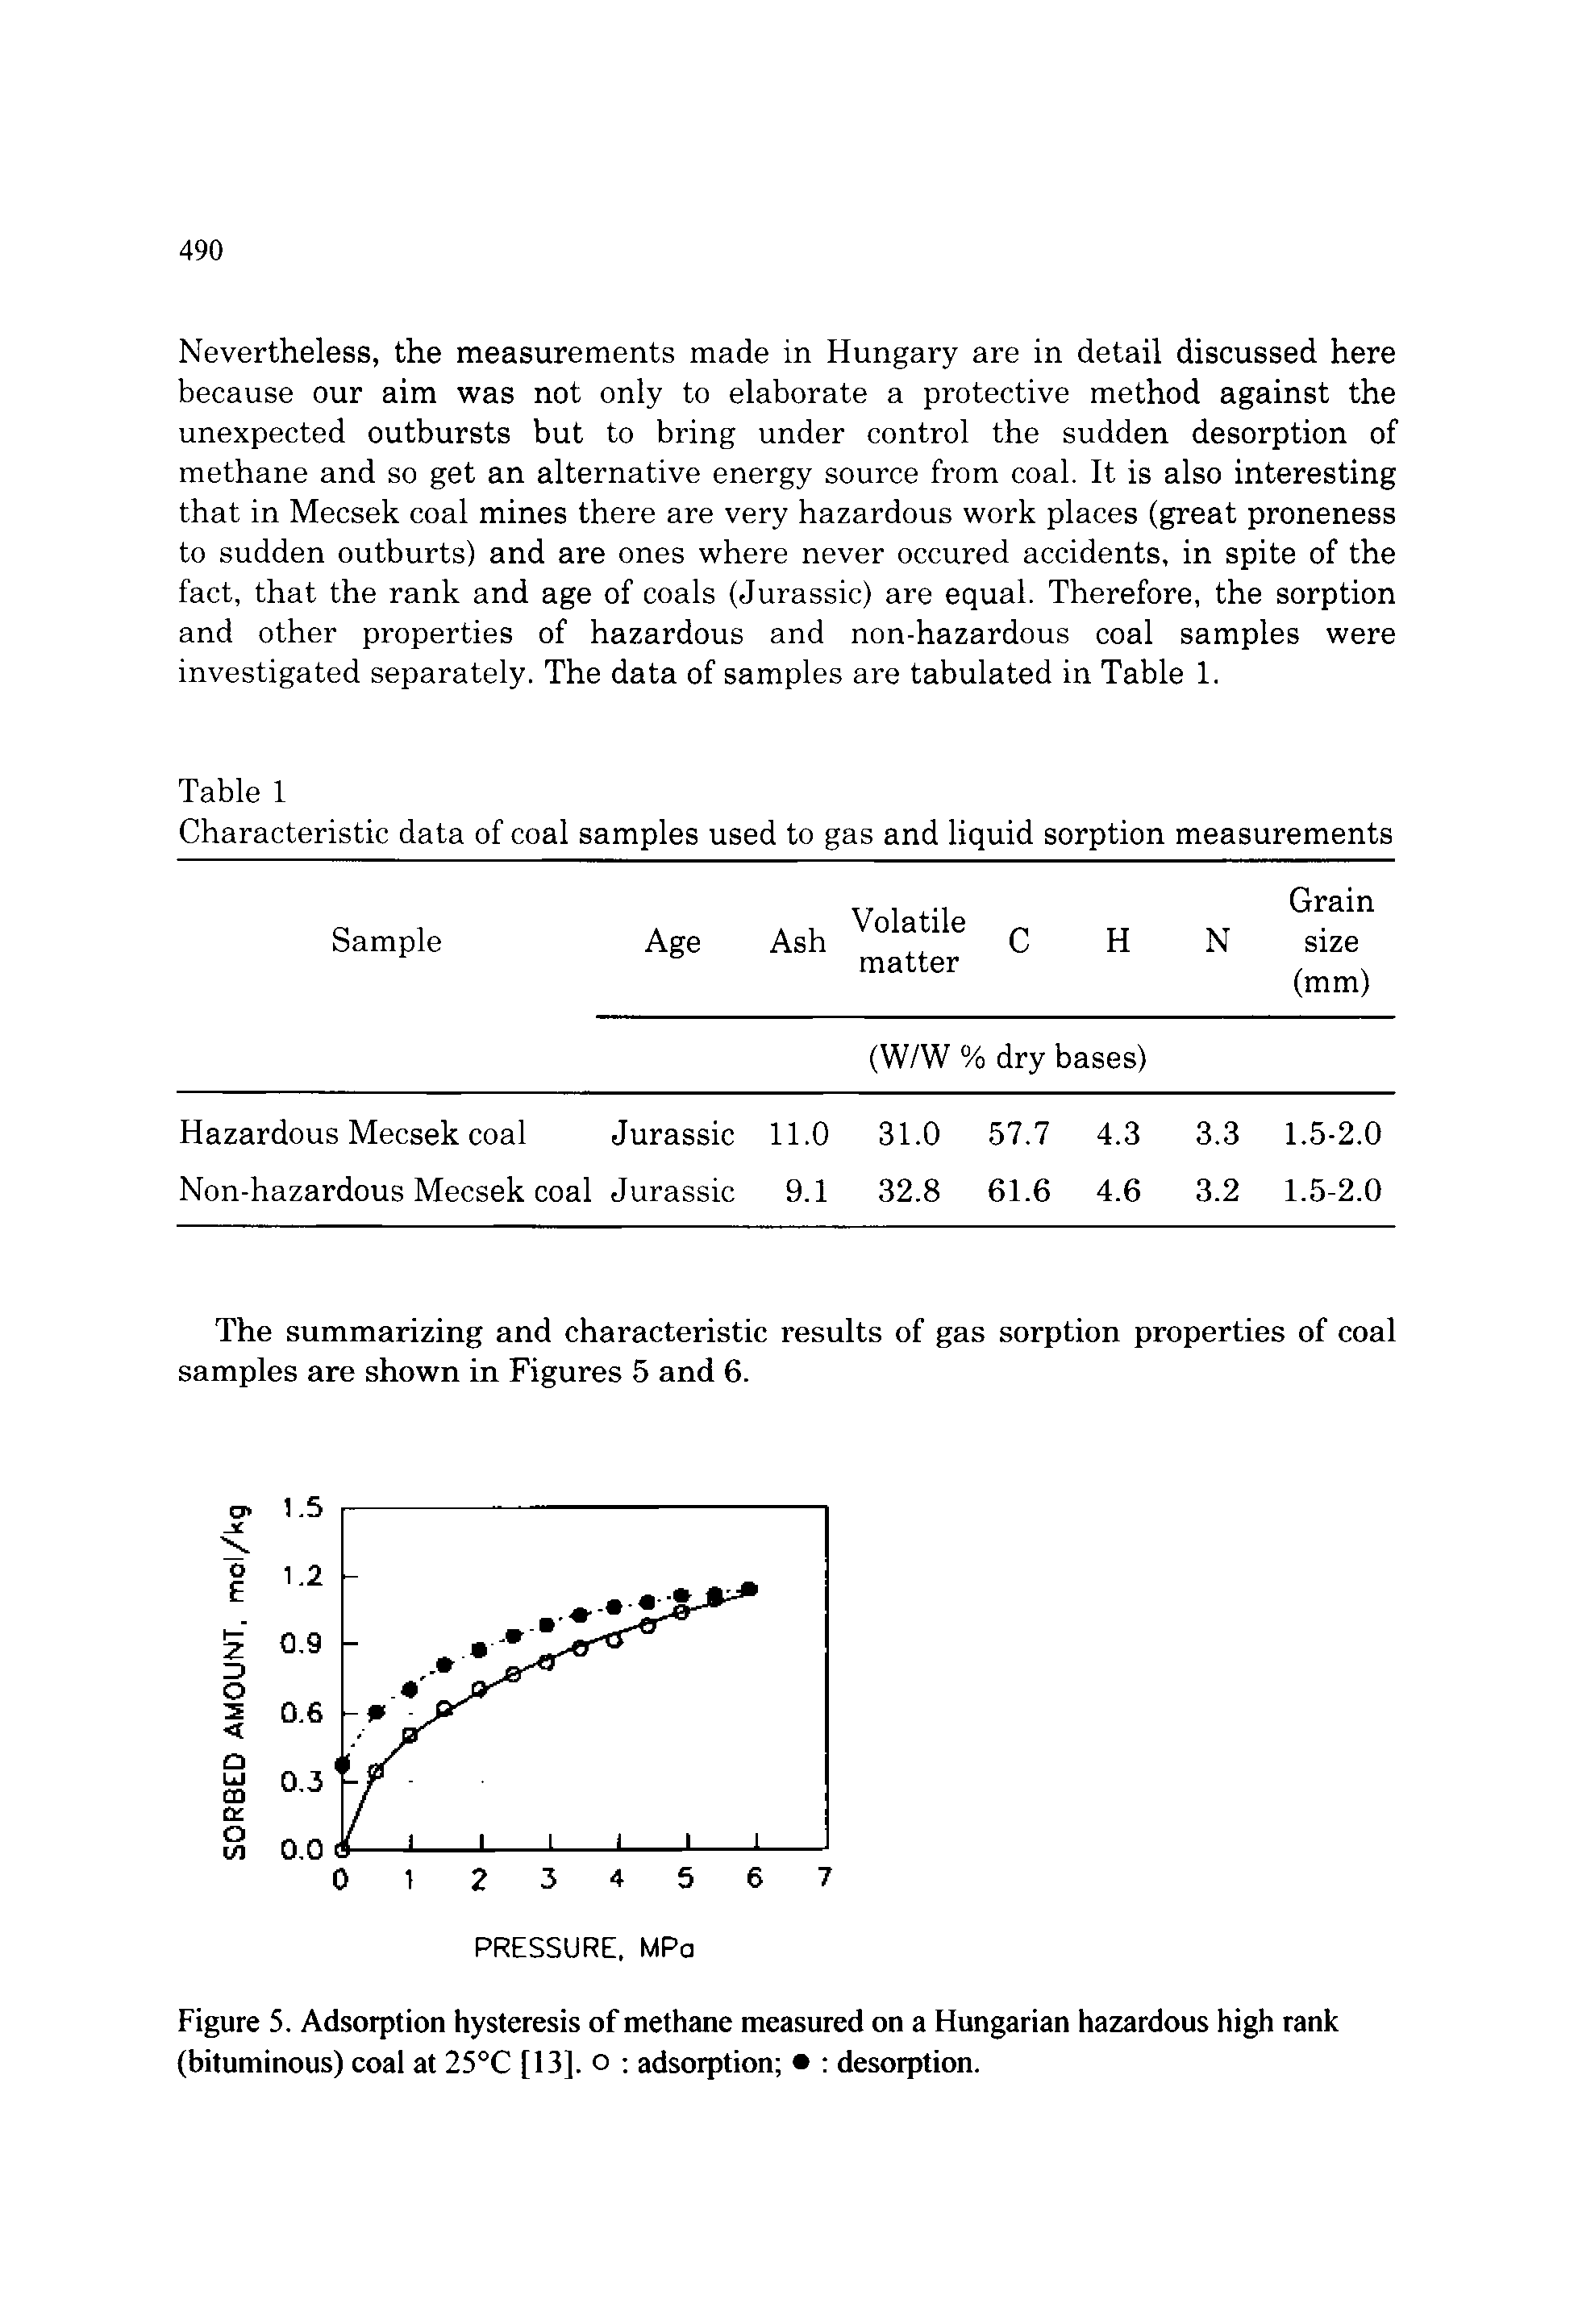 Figure 5. Adsorption hysteresis of methane measured on a Hungarian hazardous high rank (bituminous) coal at 25°C [13]. o adsorption desorption.